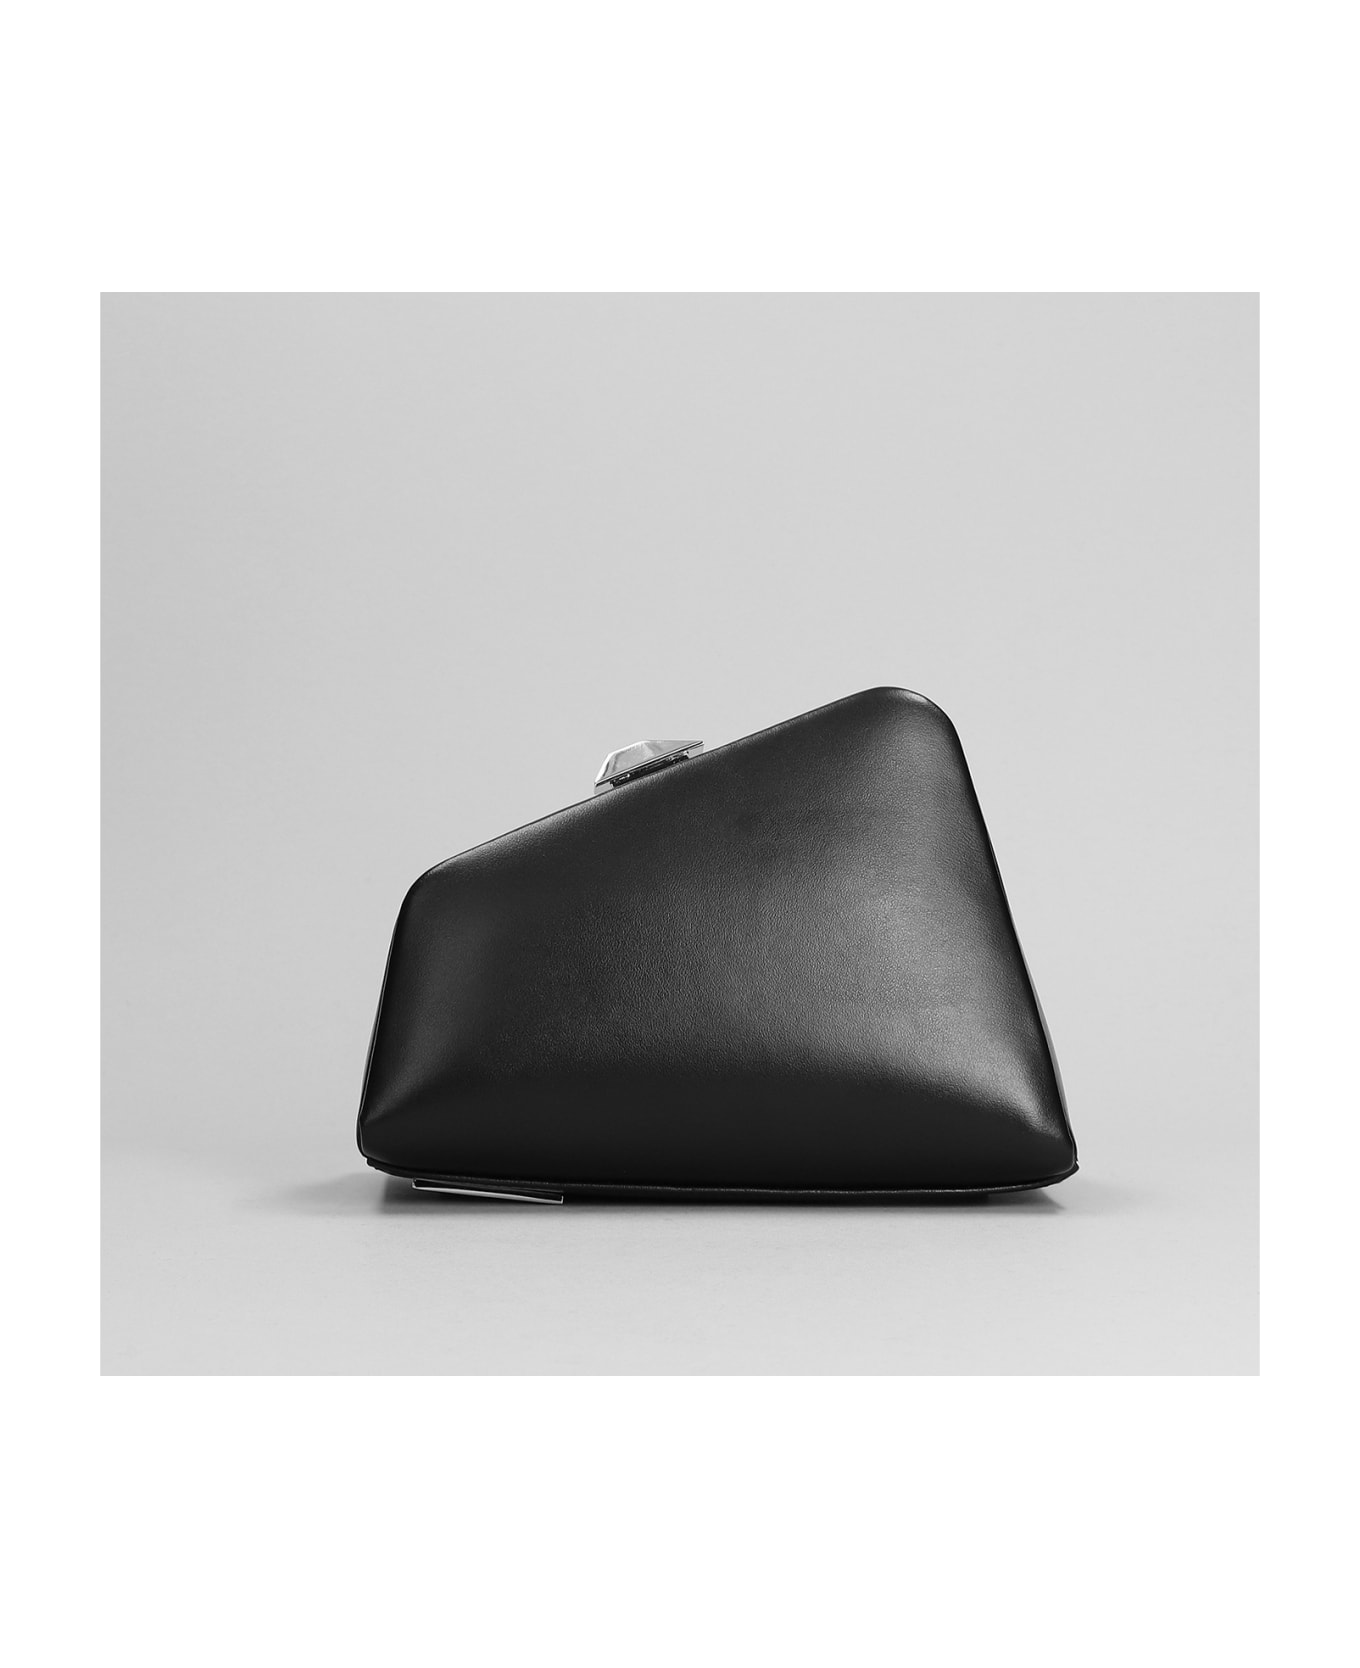 The Attico Midnight Hand Bag In Black Leather - black